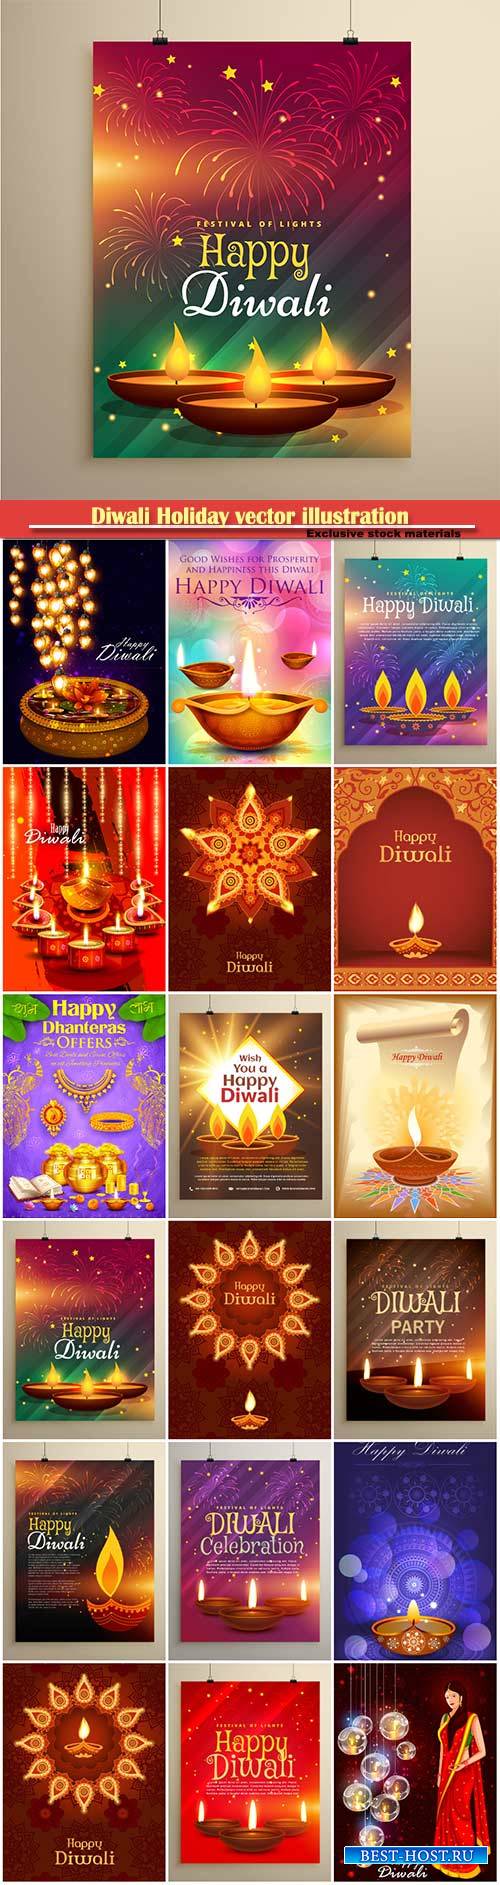 Diwali Holiday vector illustration with burning diya # 4